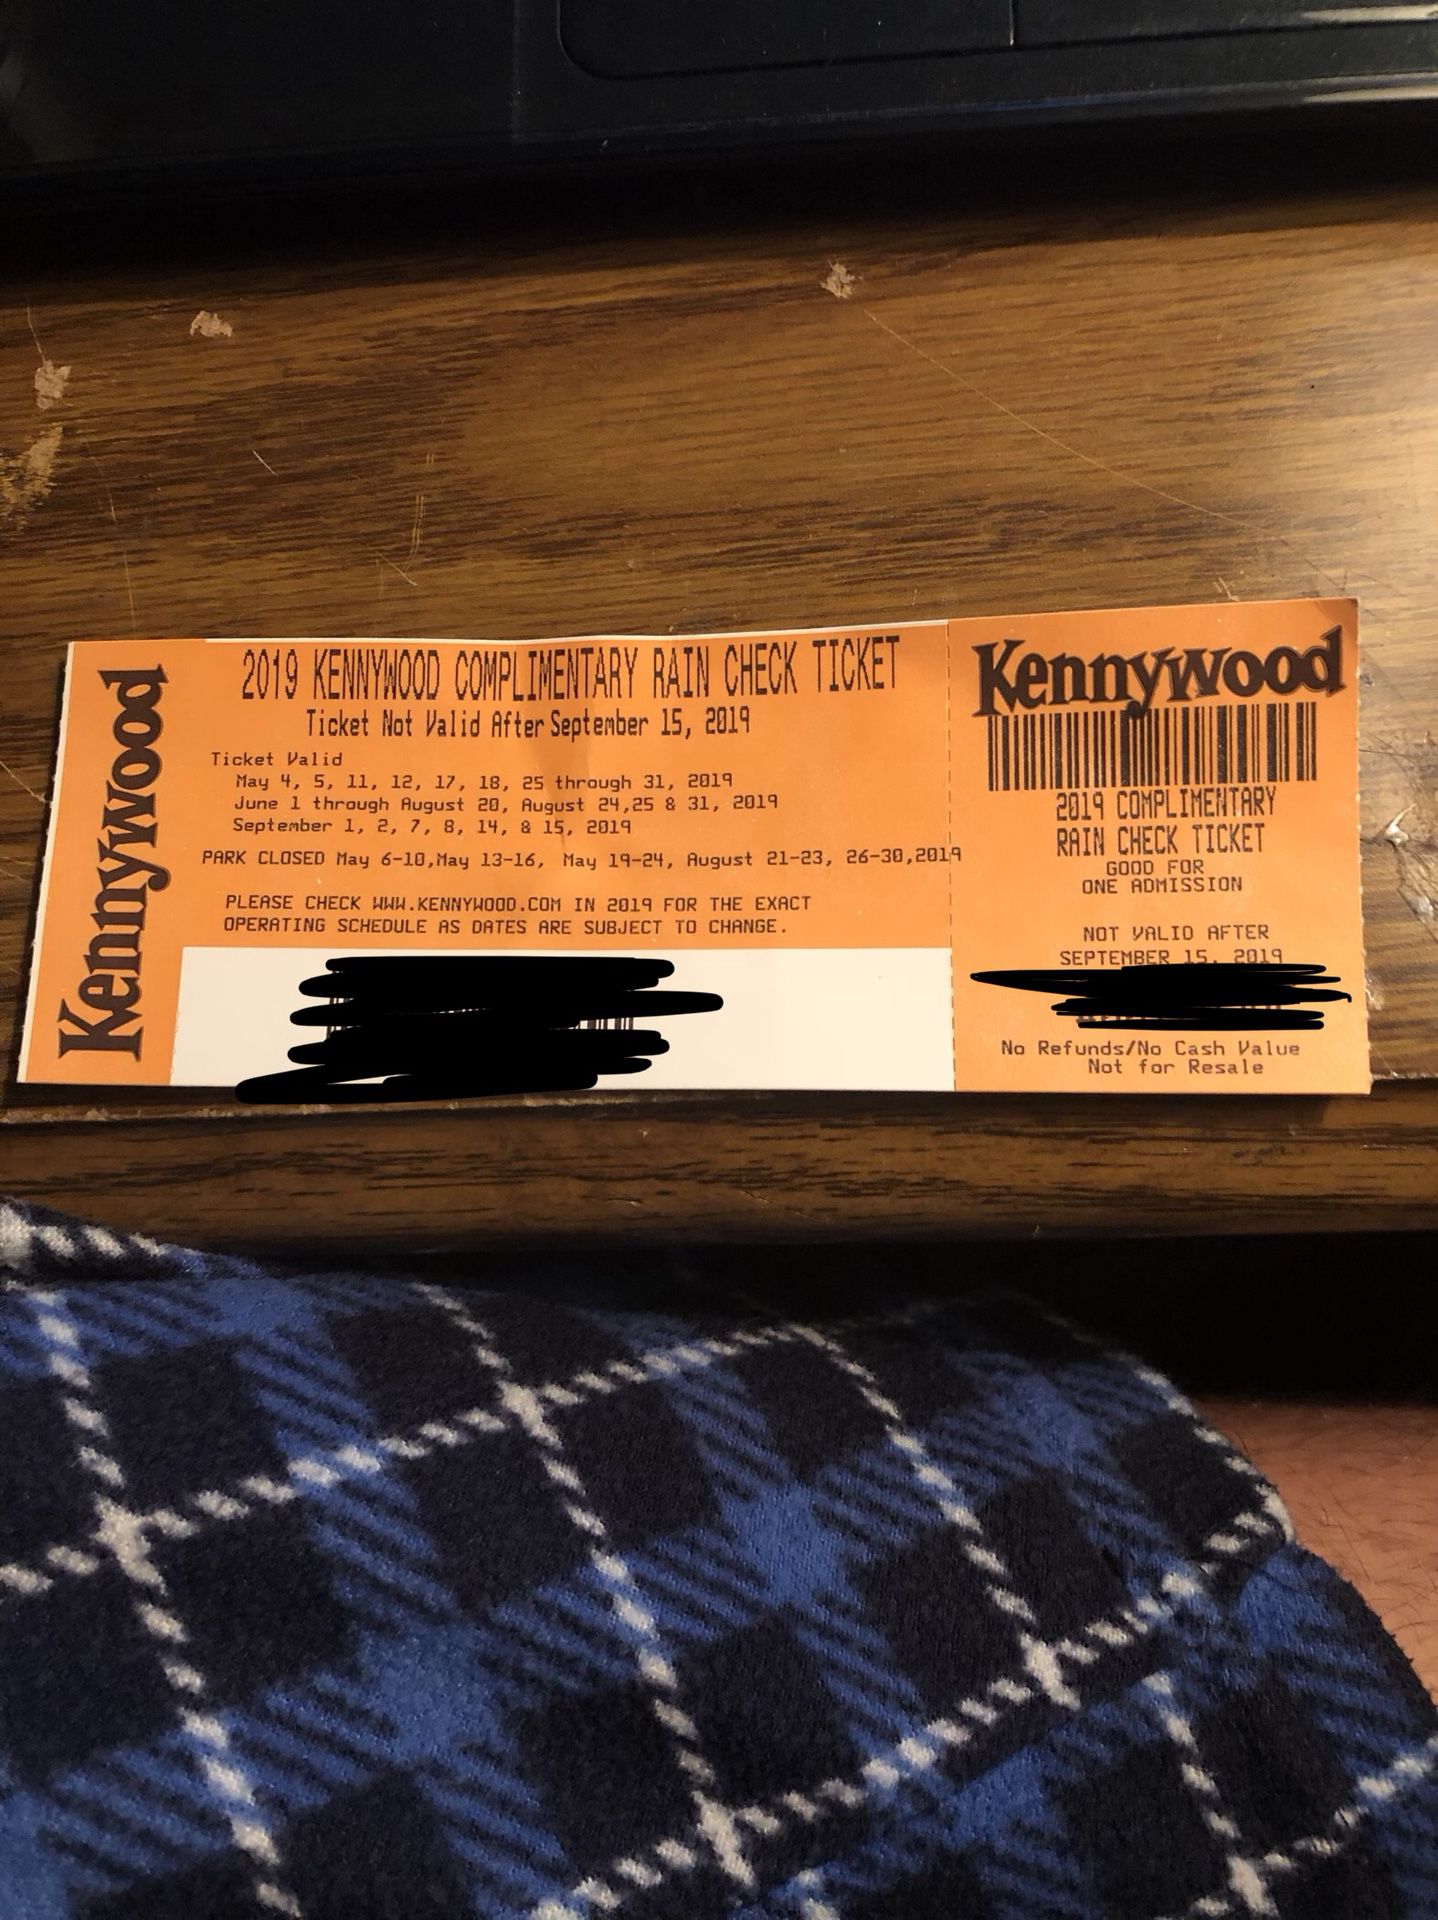 Kennywood rain check ticket